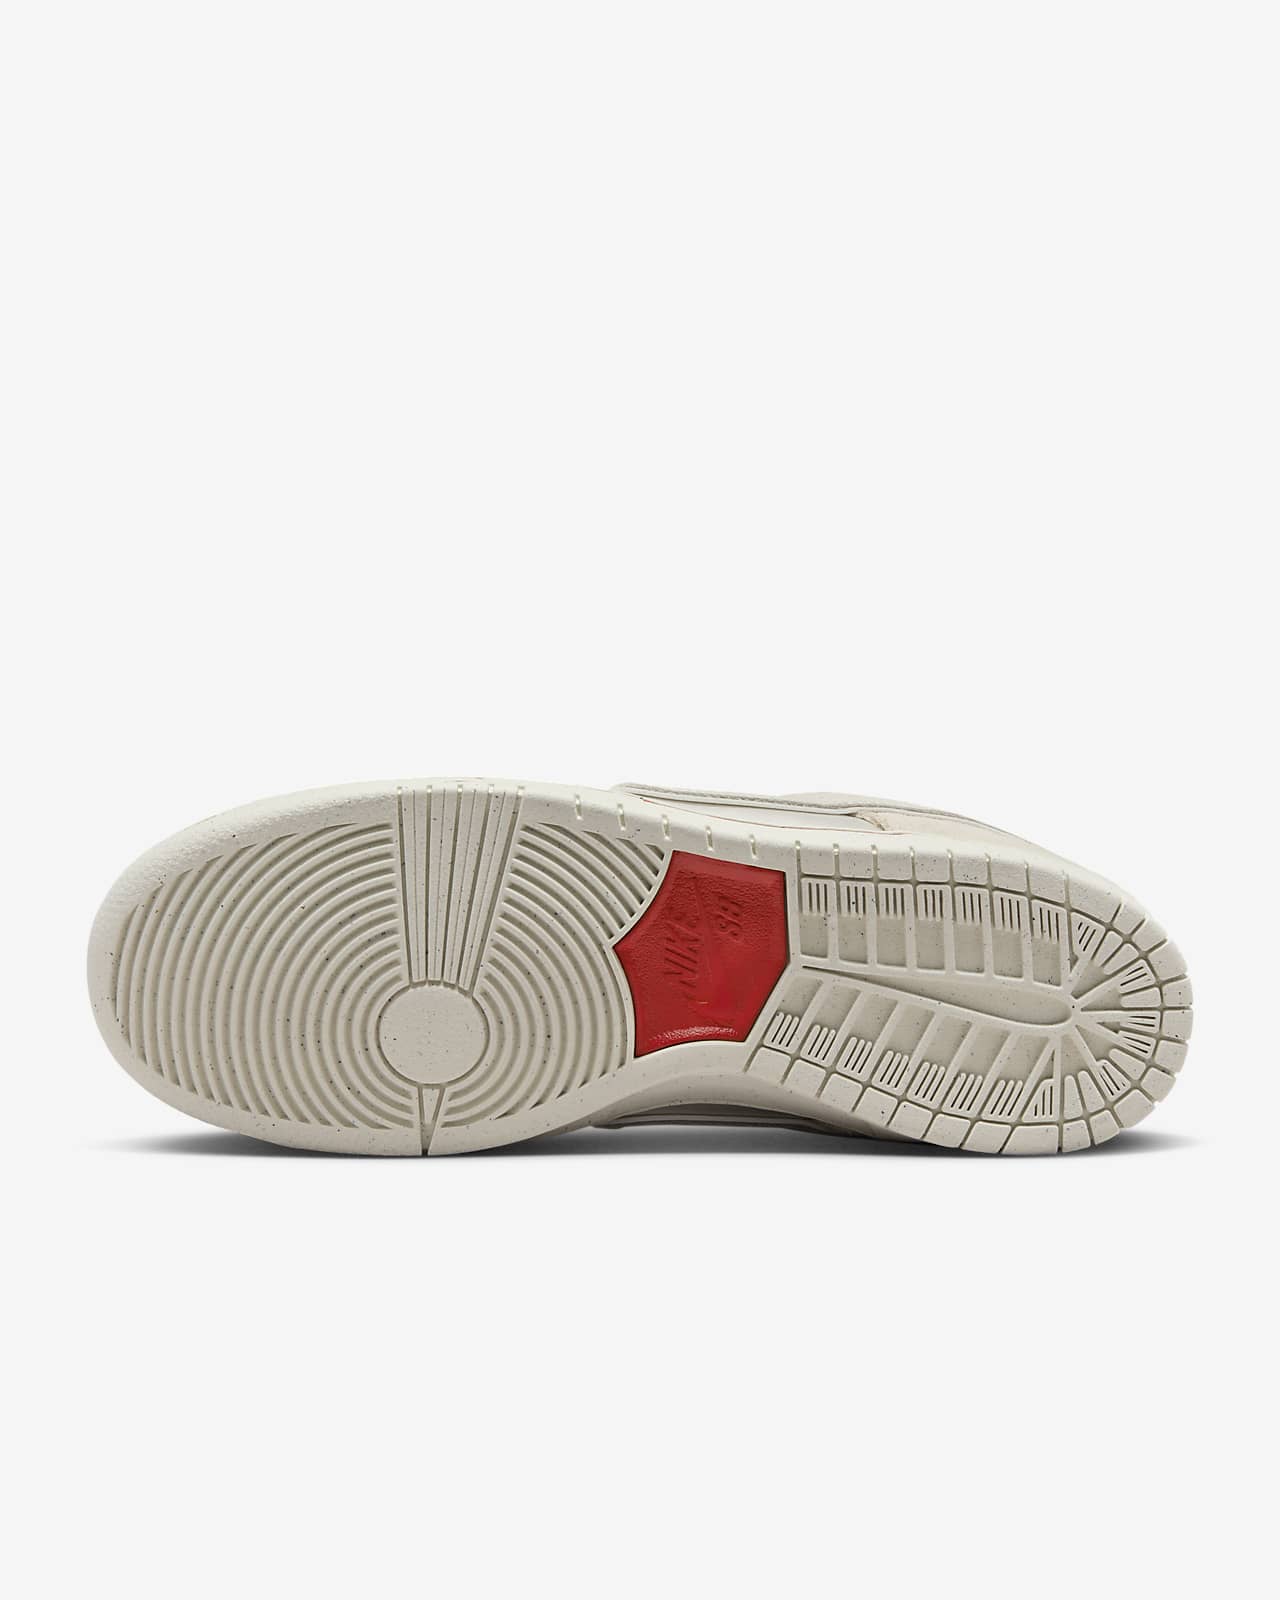 Nike SB Dunk 低筒 Premium 滑板鞋